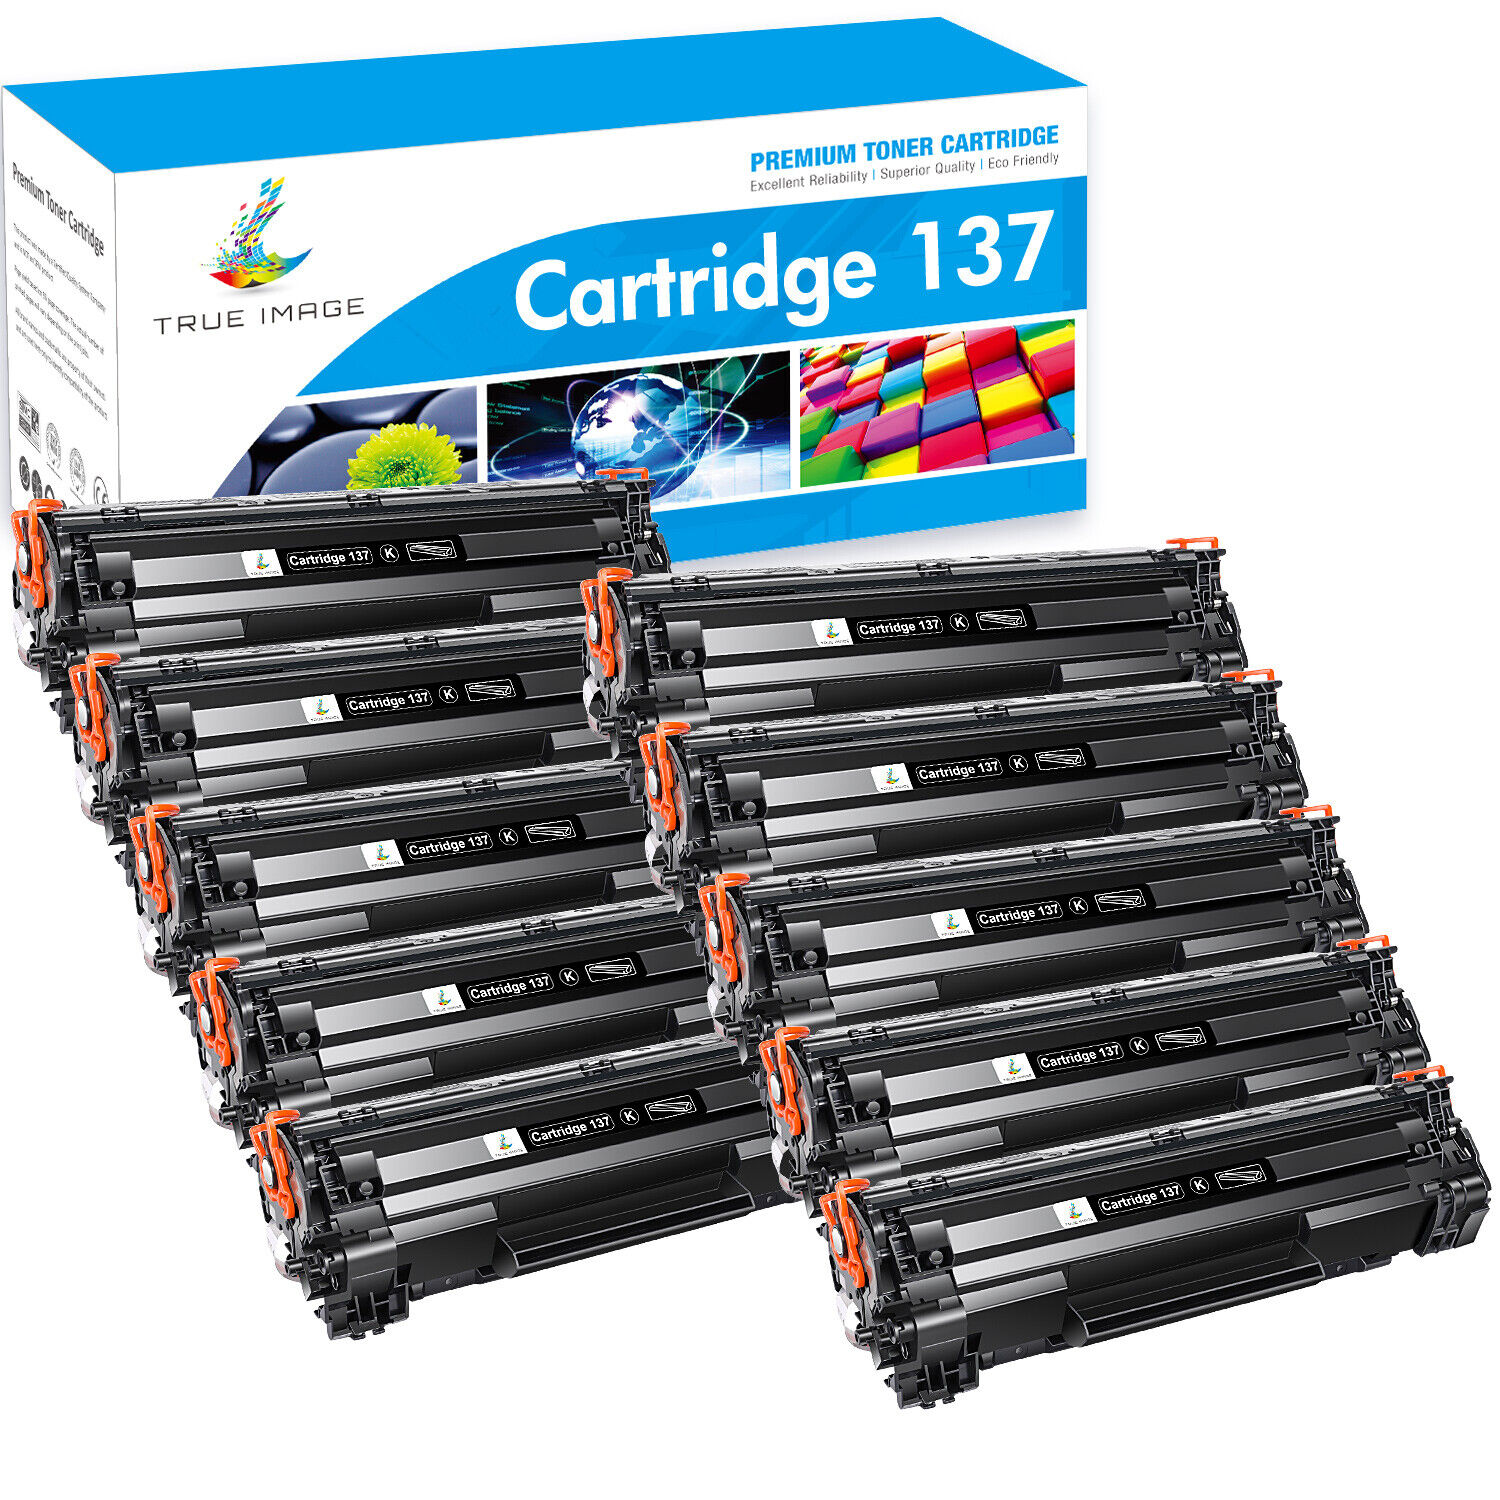 1-20 Black CRG 137 Toner for Canon 137 Toner Imageclass D570 MF242dw Printer LOT